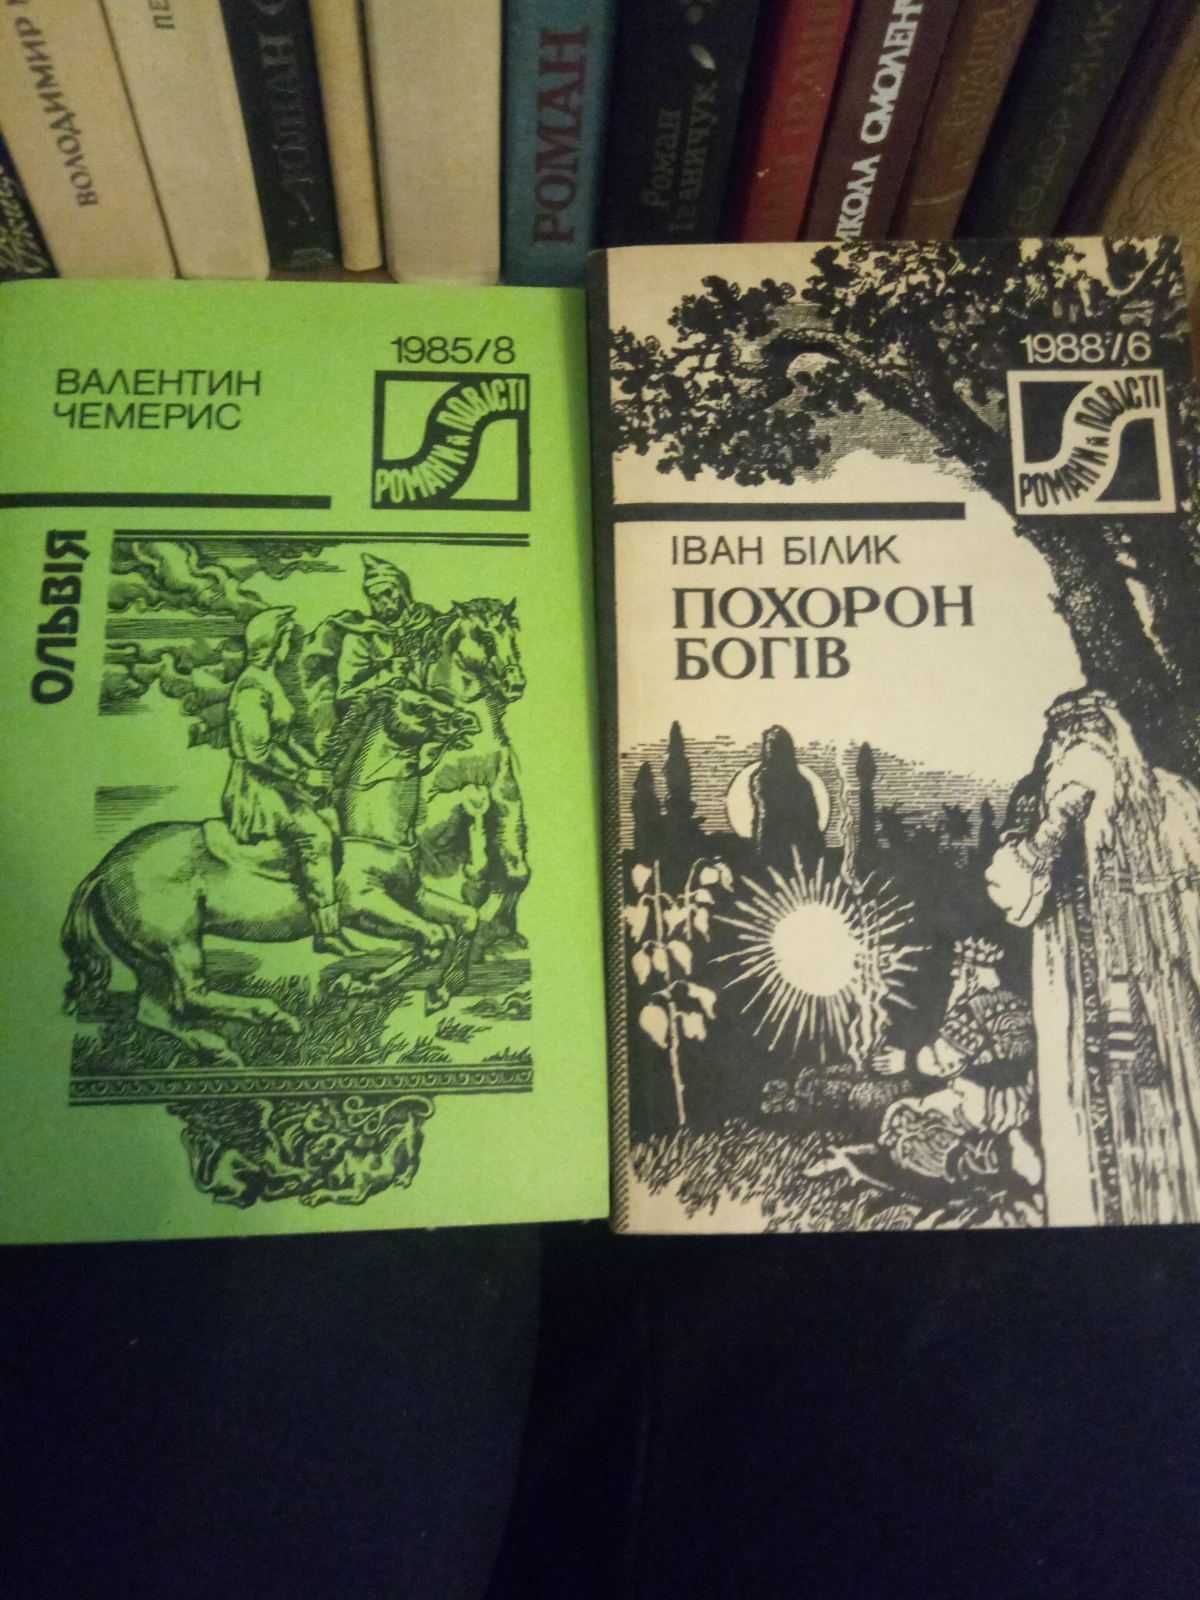 Серия книг библиотеки "МИР ПРИКЛЮЧЕНИЙ"